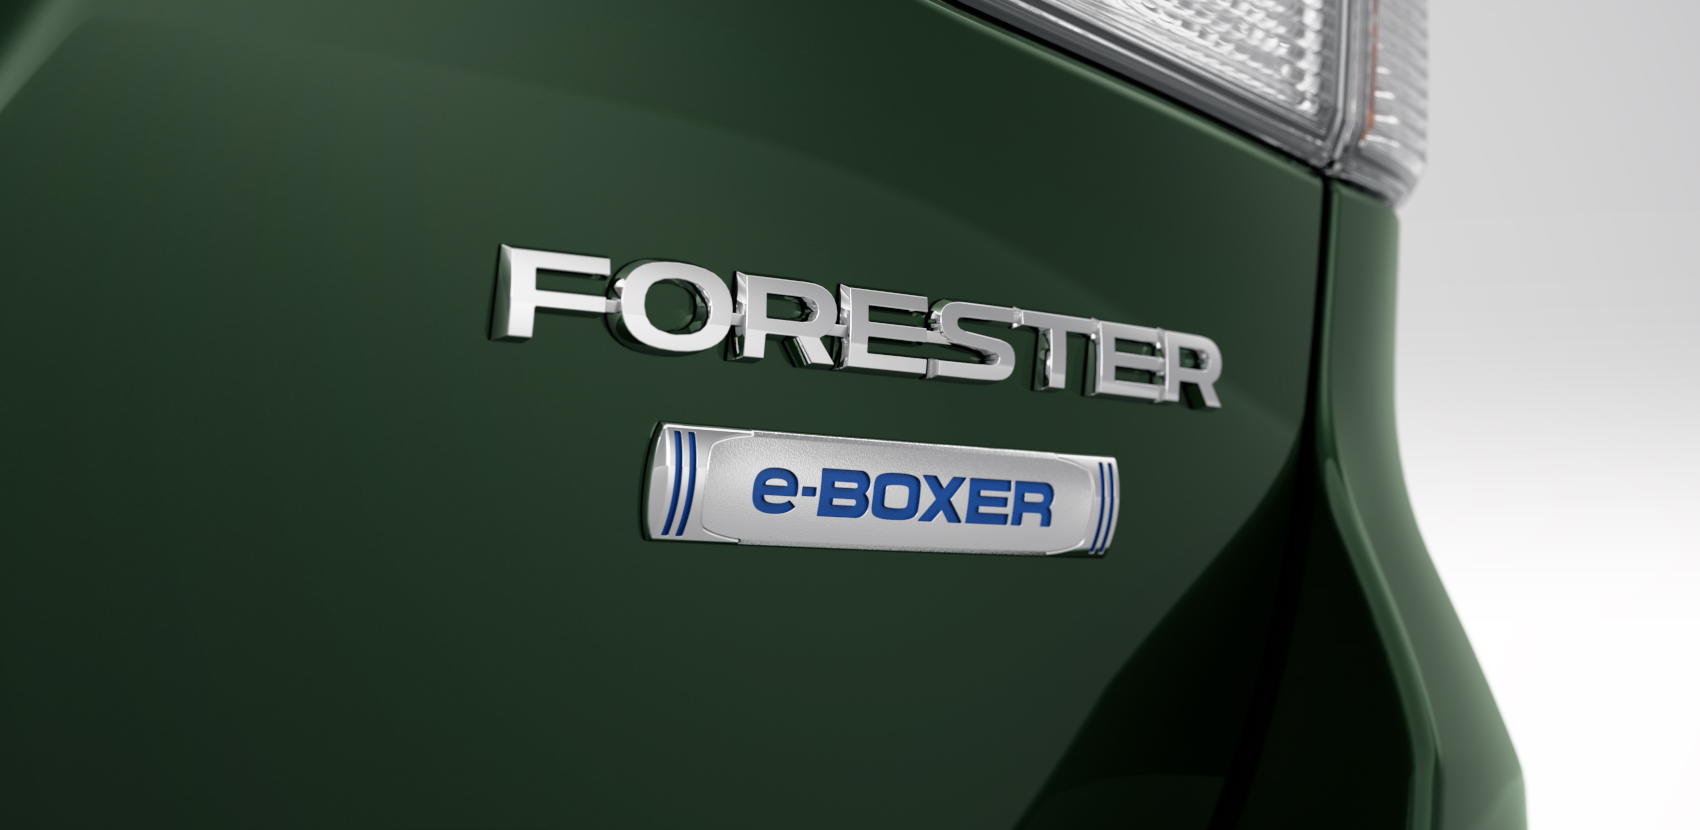 NEW FORESTER E-BOXER